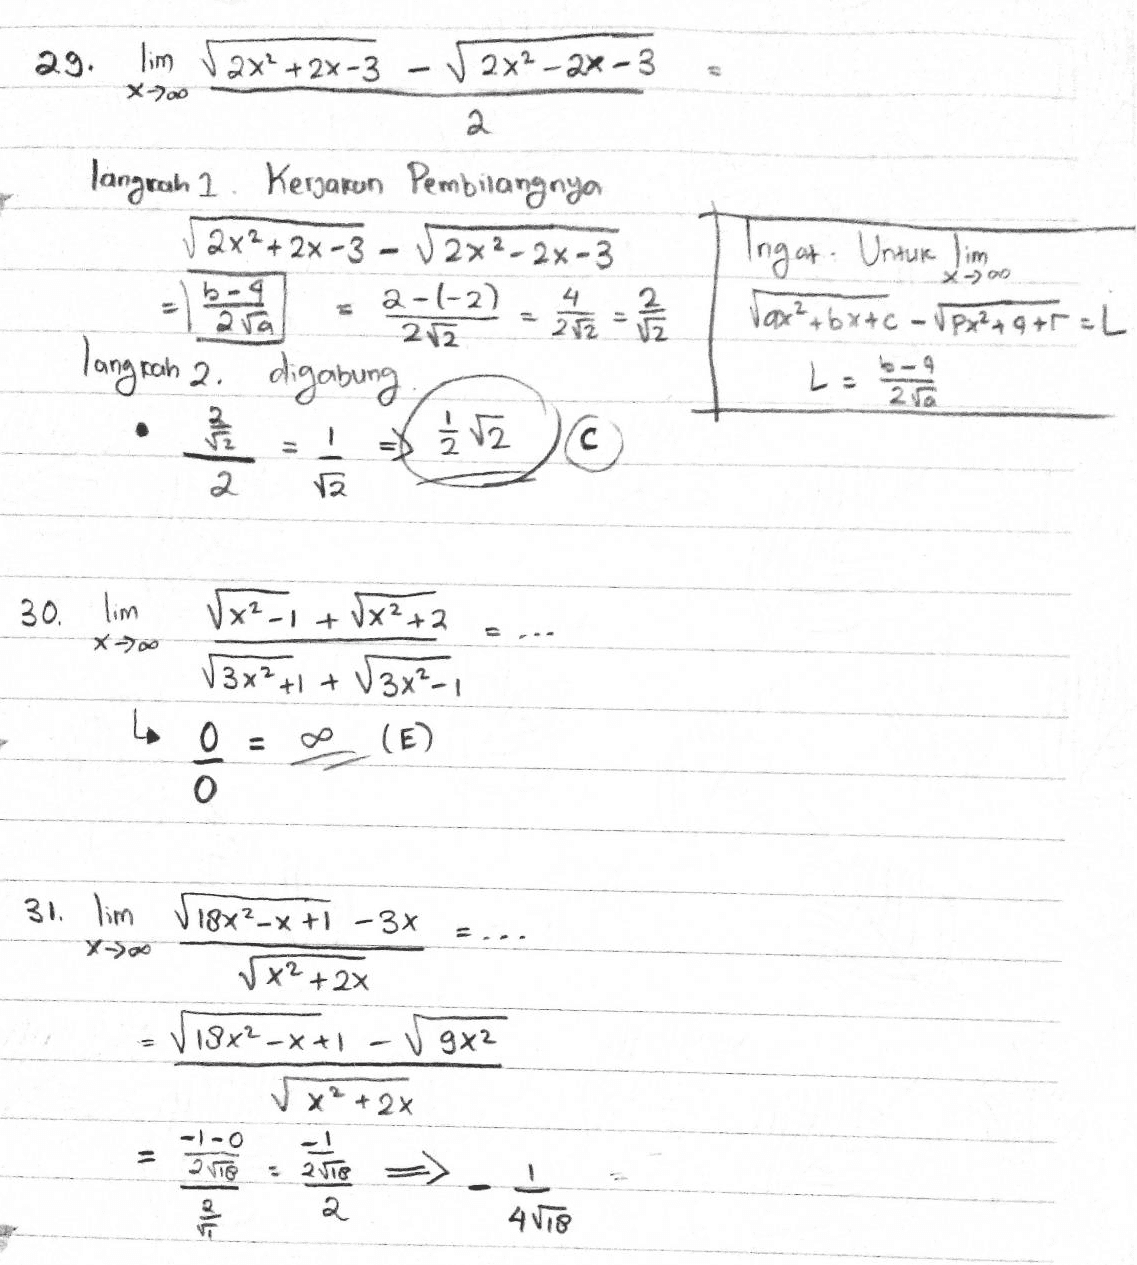 29. lim 52x² + 22-3 2x² - 2x-3 X-700 2 Ingat -> 00 langrah 1 Kerjarun Pembilangnya 2x2 + 2x-3 - 2x2-28-3 2-(-2) 2/2 langrah 2. digabung 1/2 52 © b-9 4 2 252 Ingat. Untuk Jim Vax²+bx+c - Upx² + 9 +5 = L b = b 2 210 . 11 I - 2 30. lim X \x² + x²+2 √3x +1 + + √3x², 41 0 (E) Y-> 31. lim V18x²_X+1 - 3x √x² + 2x Visx²- 5x² + 2x - x + 1 V x² 11 Tale . 2118 710 2 . ㅗ 4178 